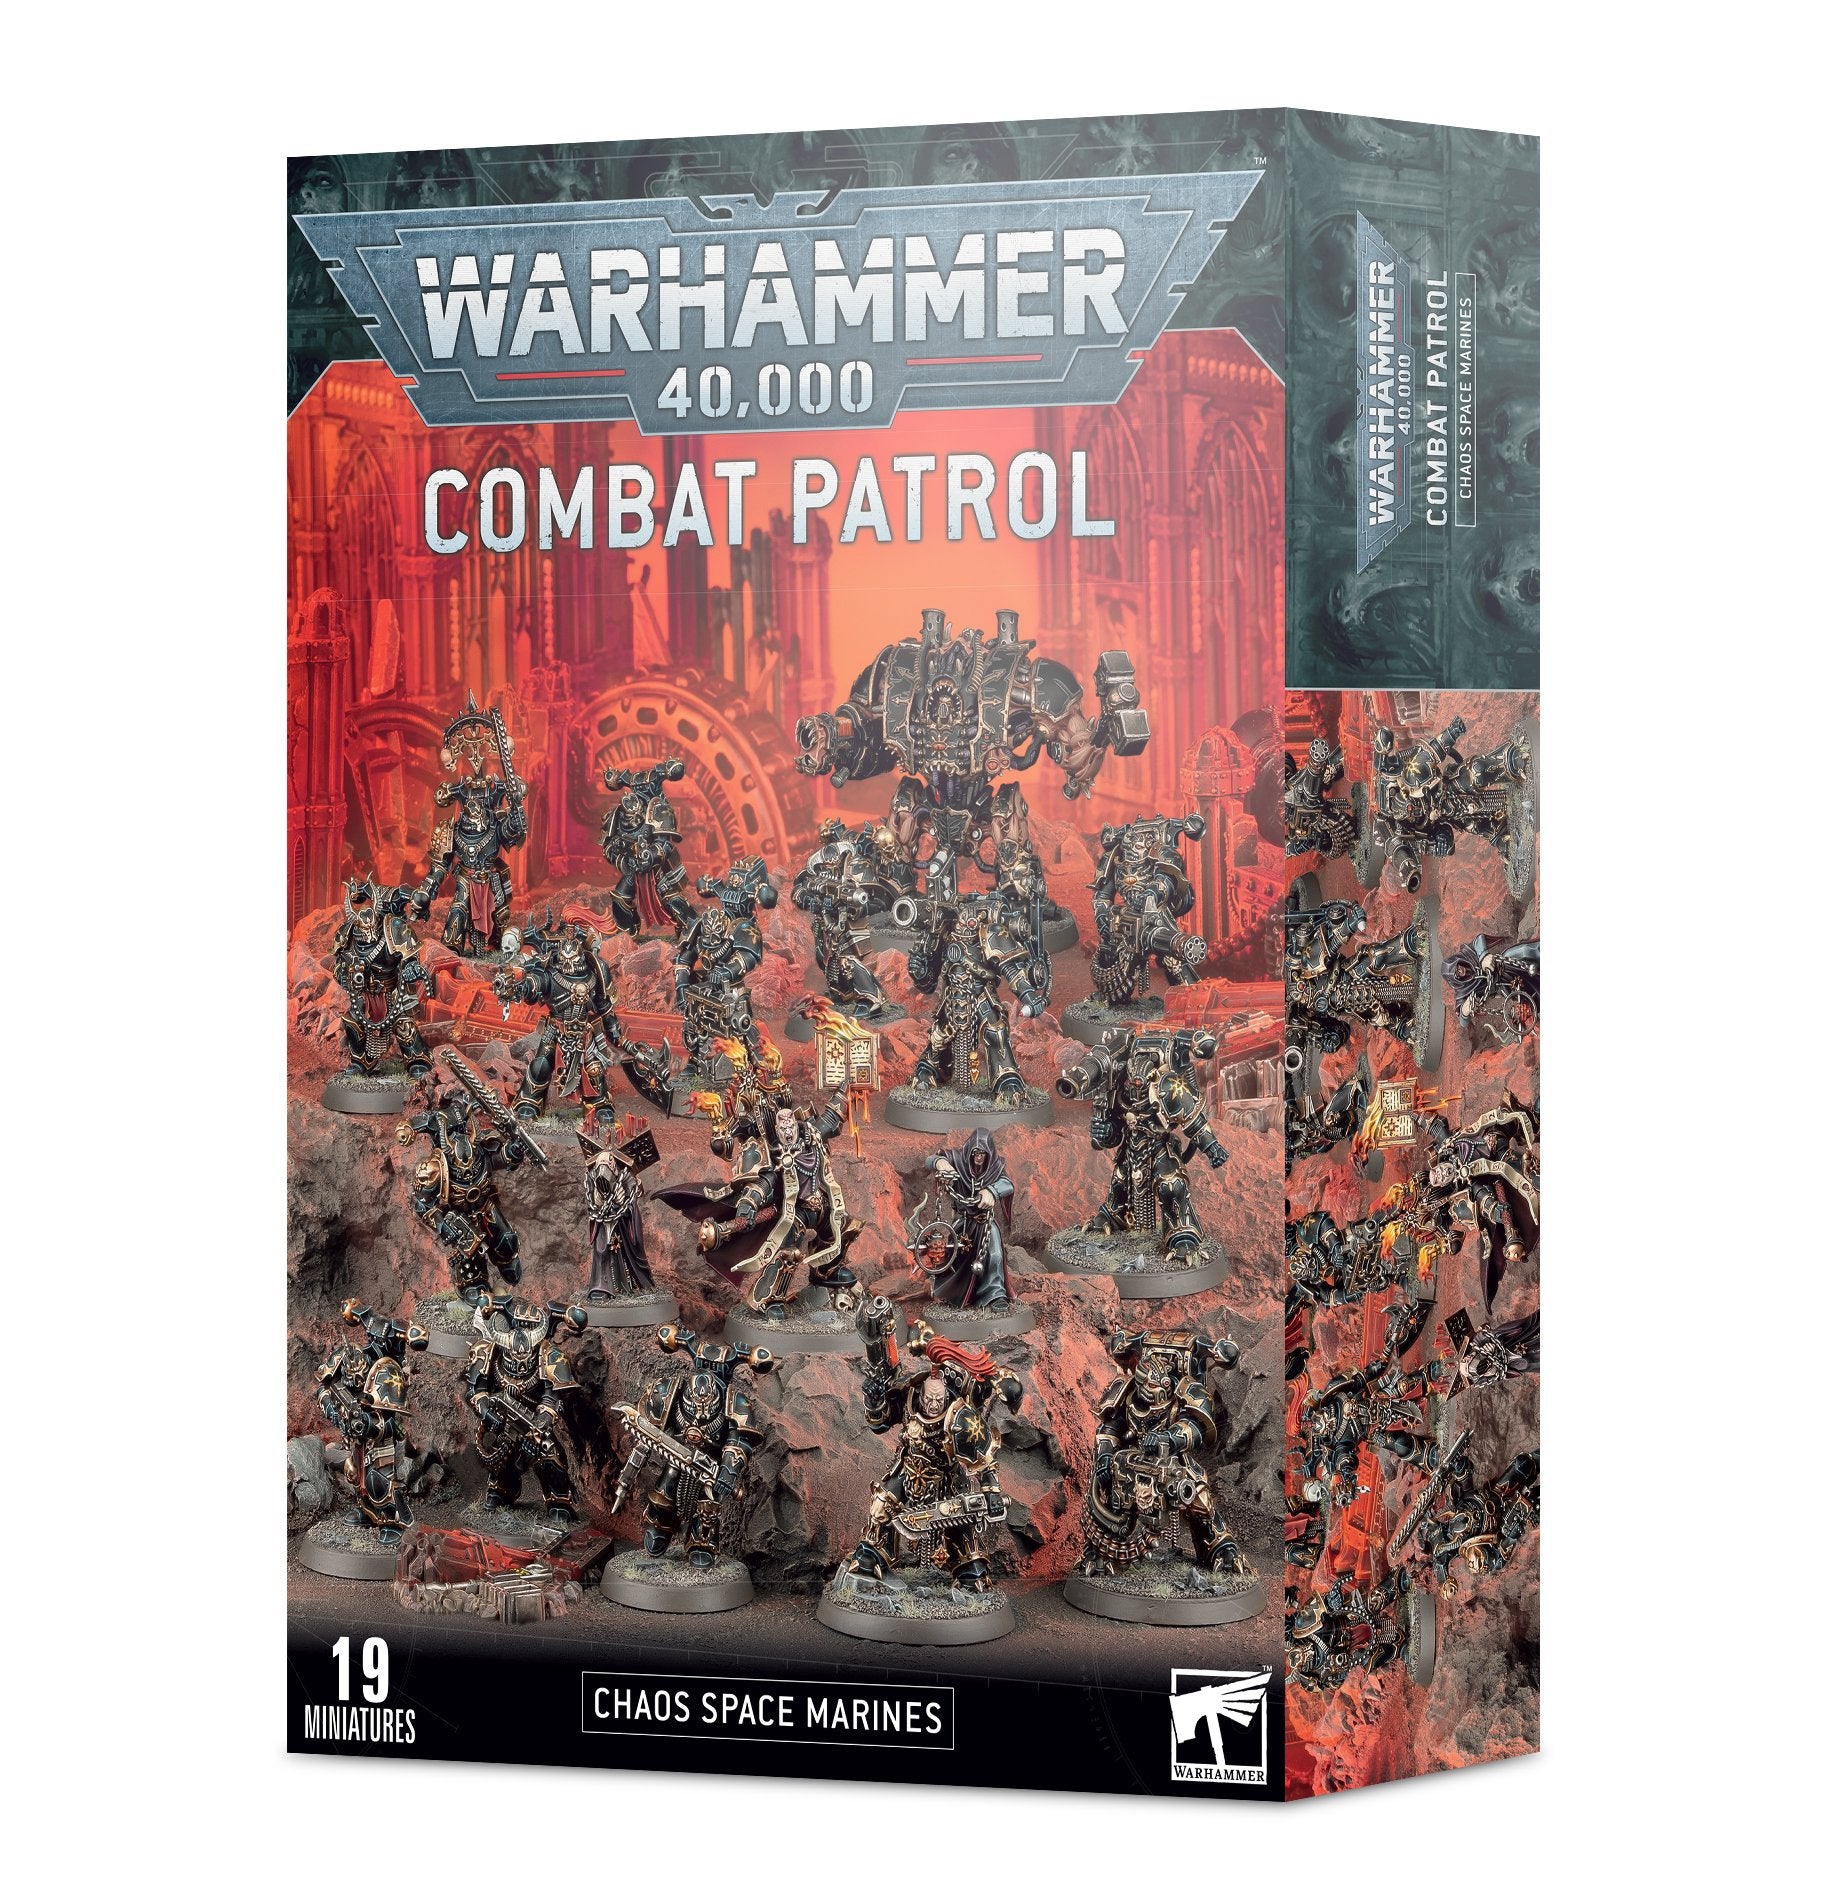 Combat-patrol-chaos-space-marines-warhammer-40K